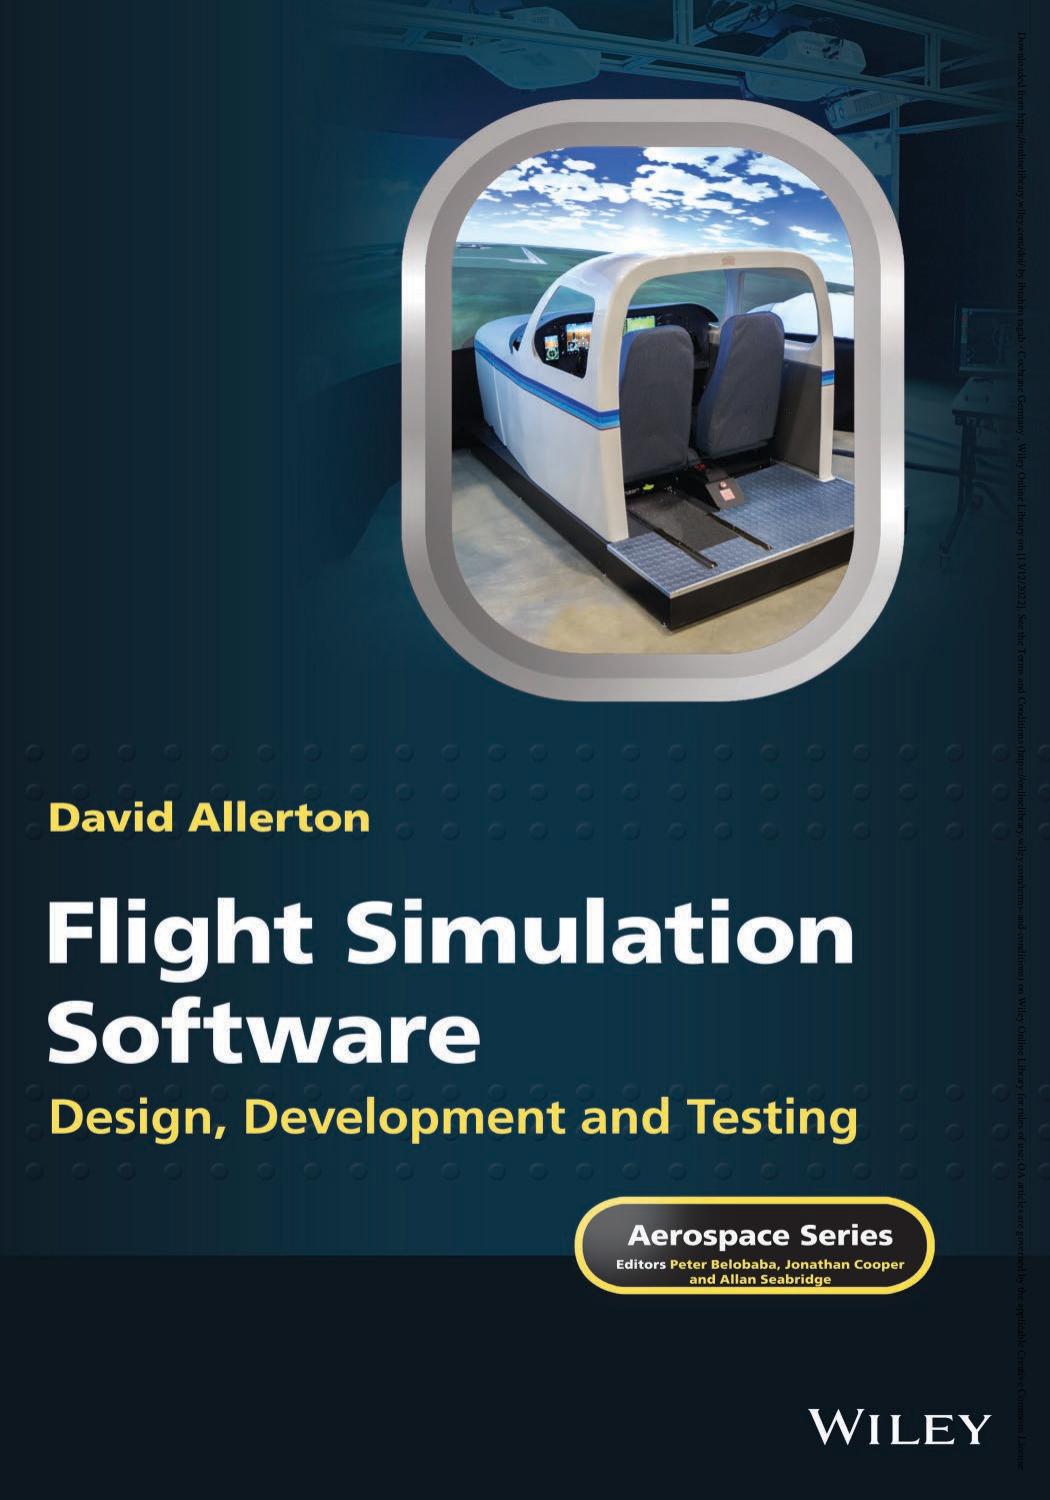 Flight Simulation Software: Design, Development and Testing by David Allerton